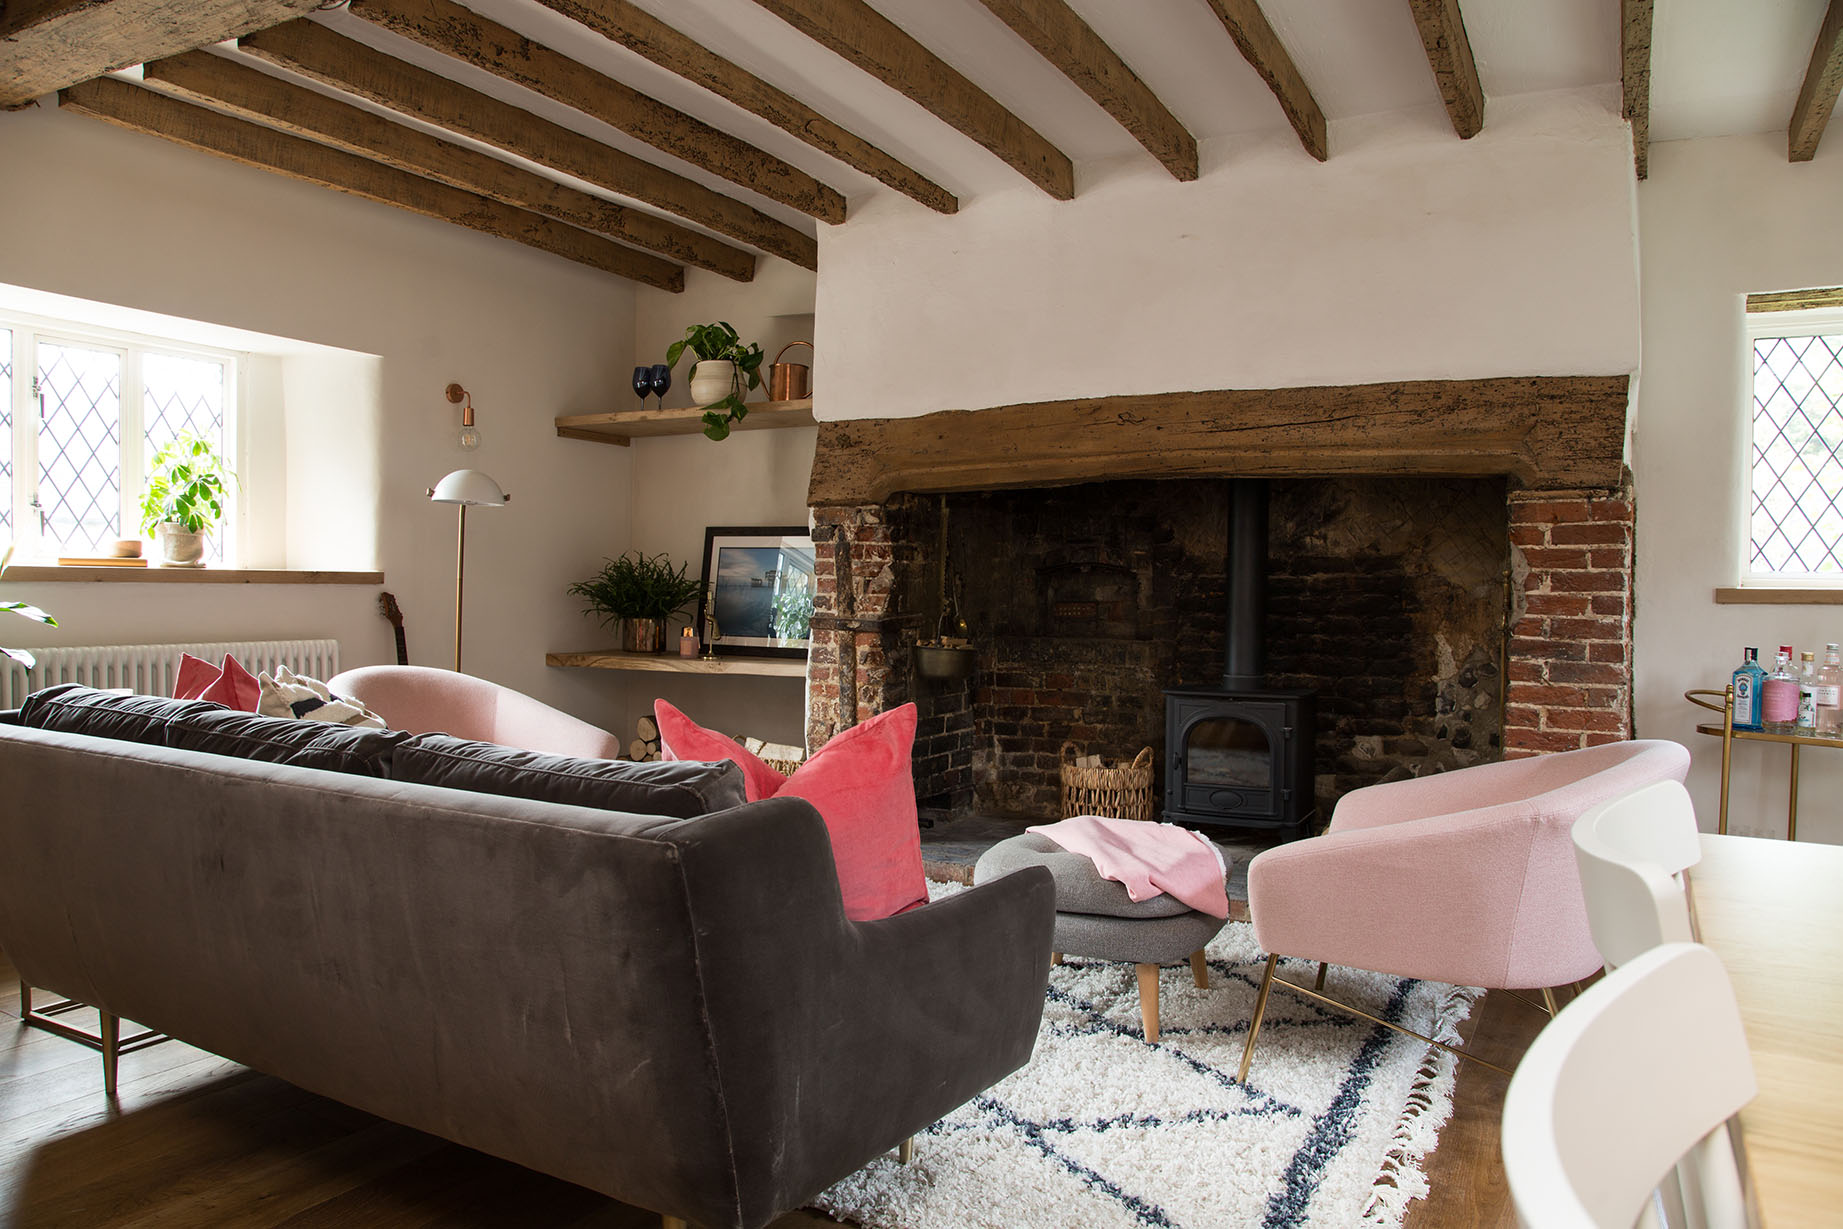 Living room showing warm oak finish